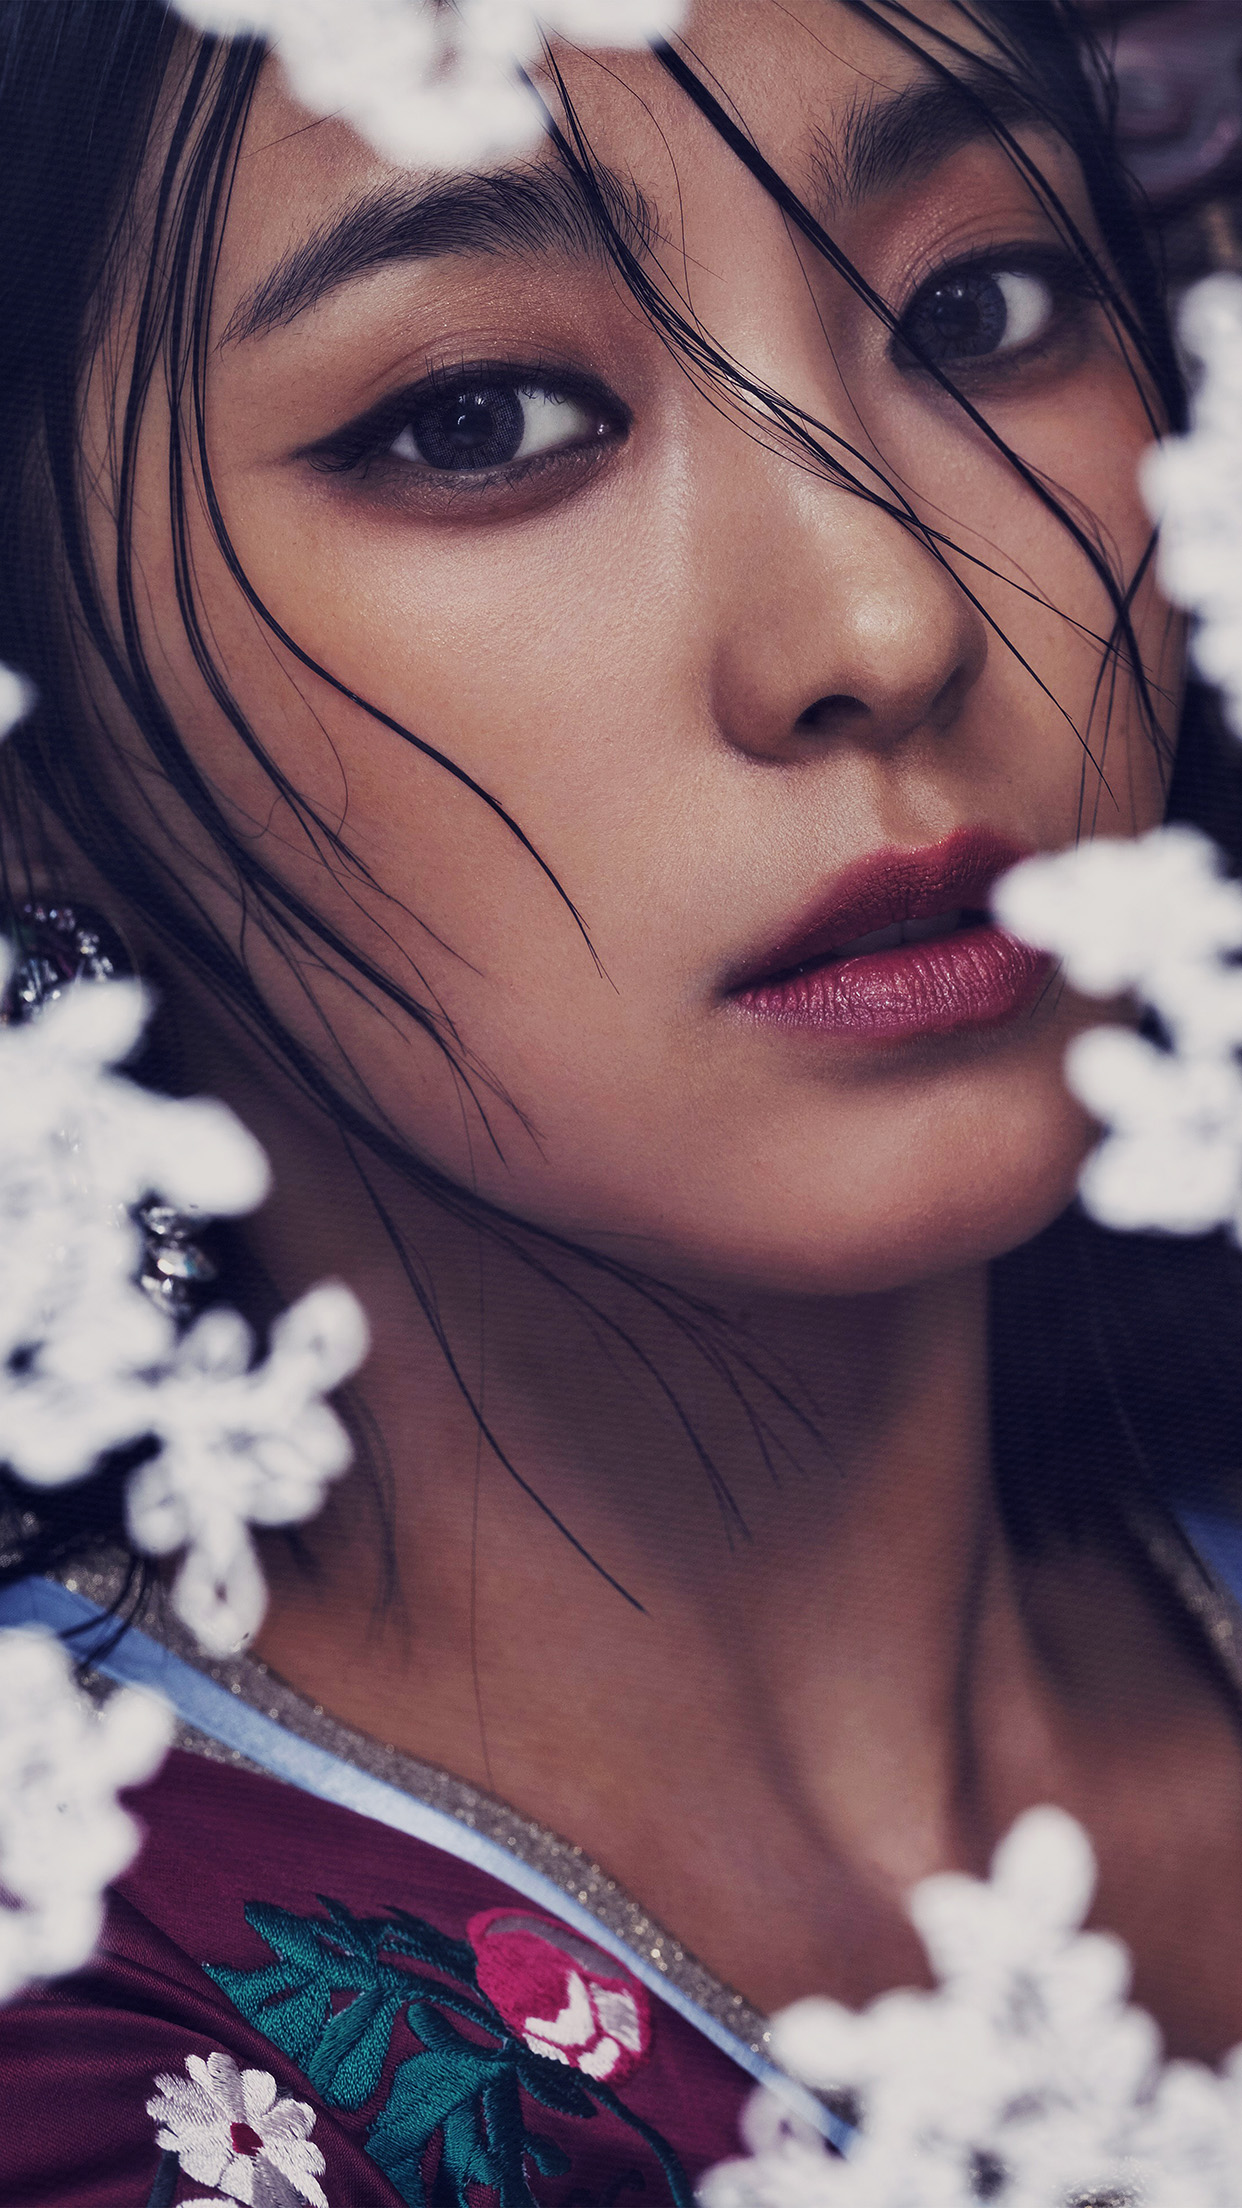 Kpop Sistar Summer Girl Face Music Android wallpaper